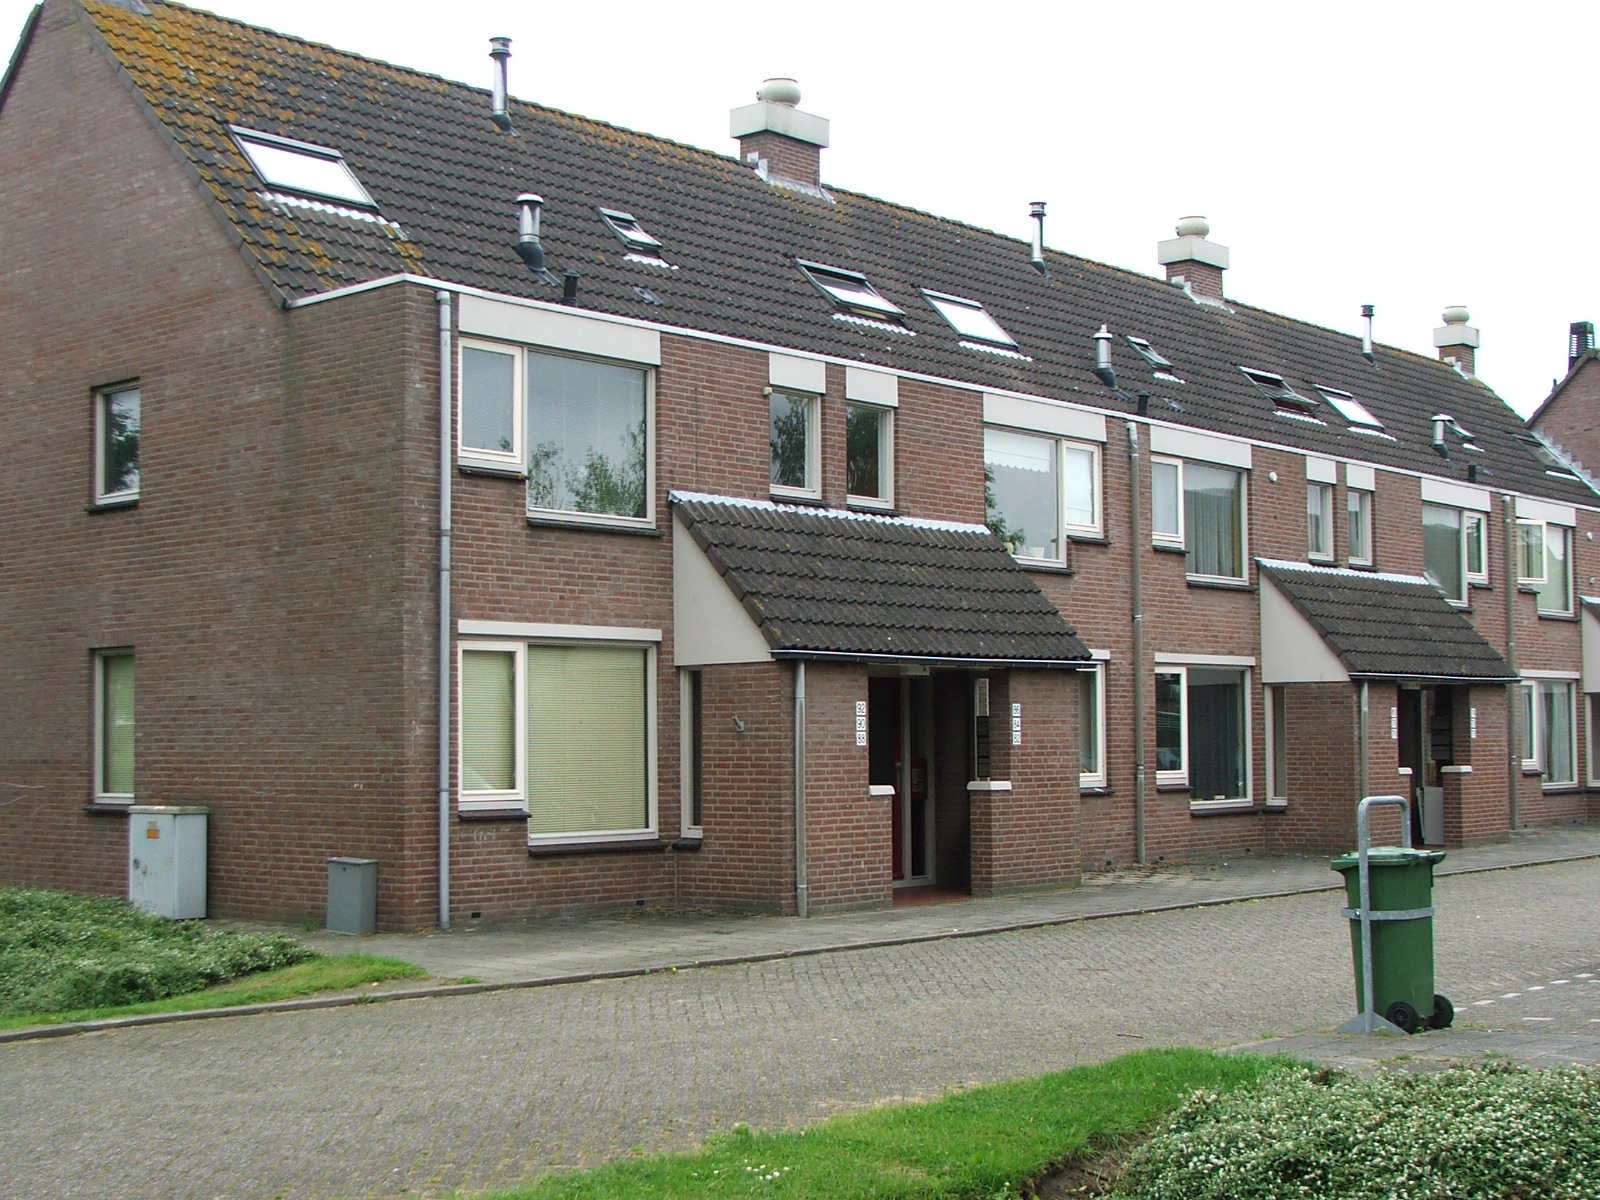 Kloofpad 70, 2451 GD Leimuiden, Nederland